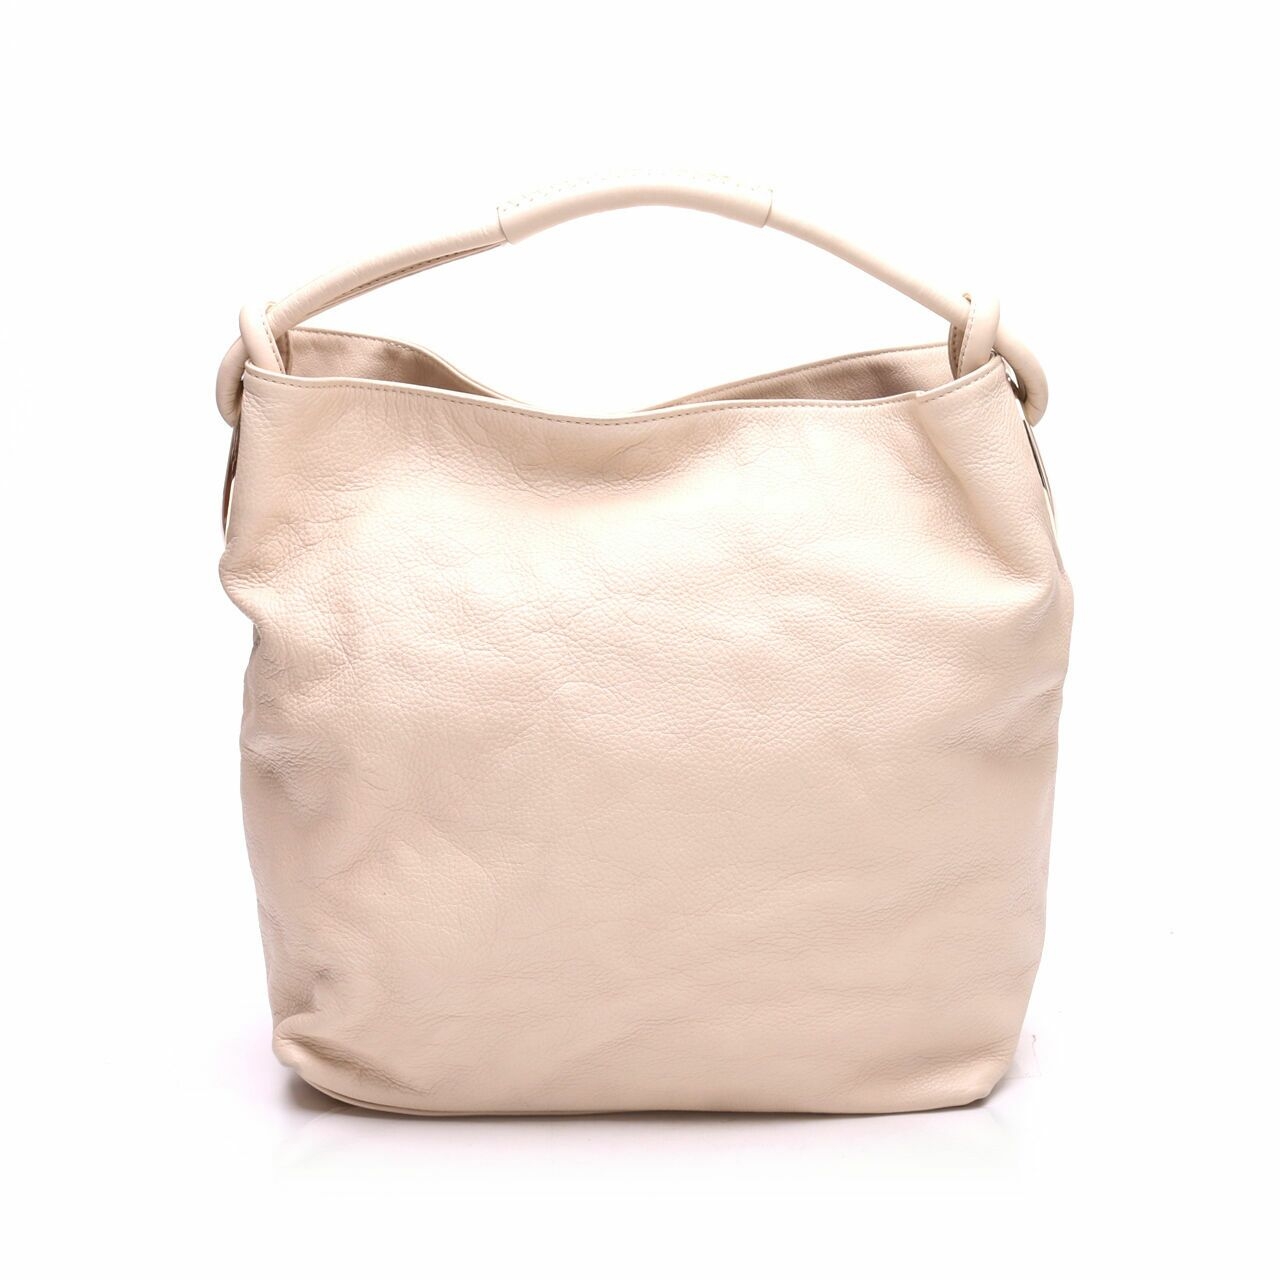 Oroton Cream Leather Shoulder Bag